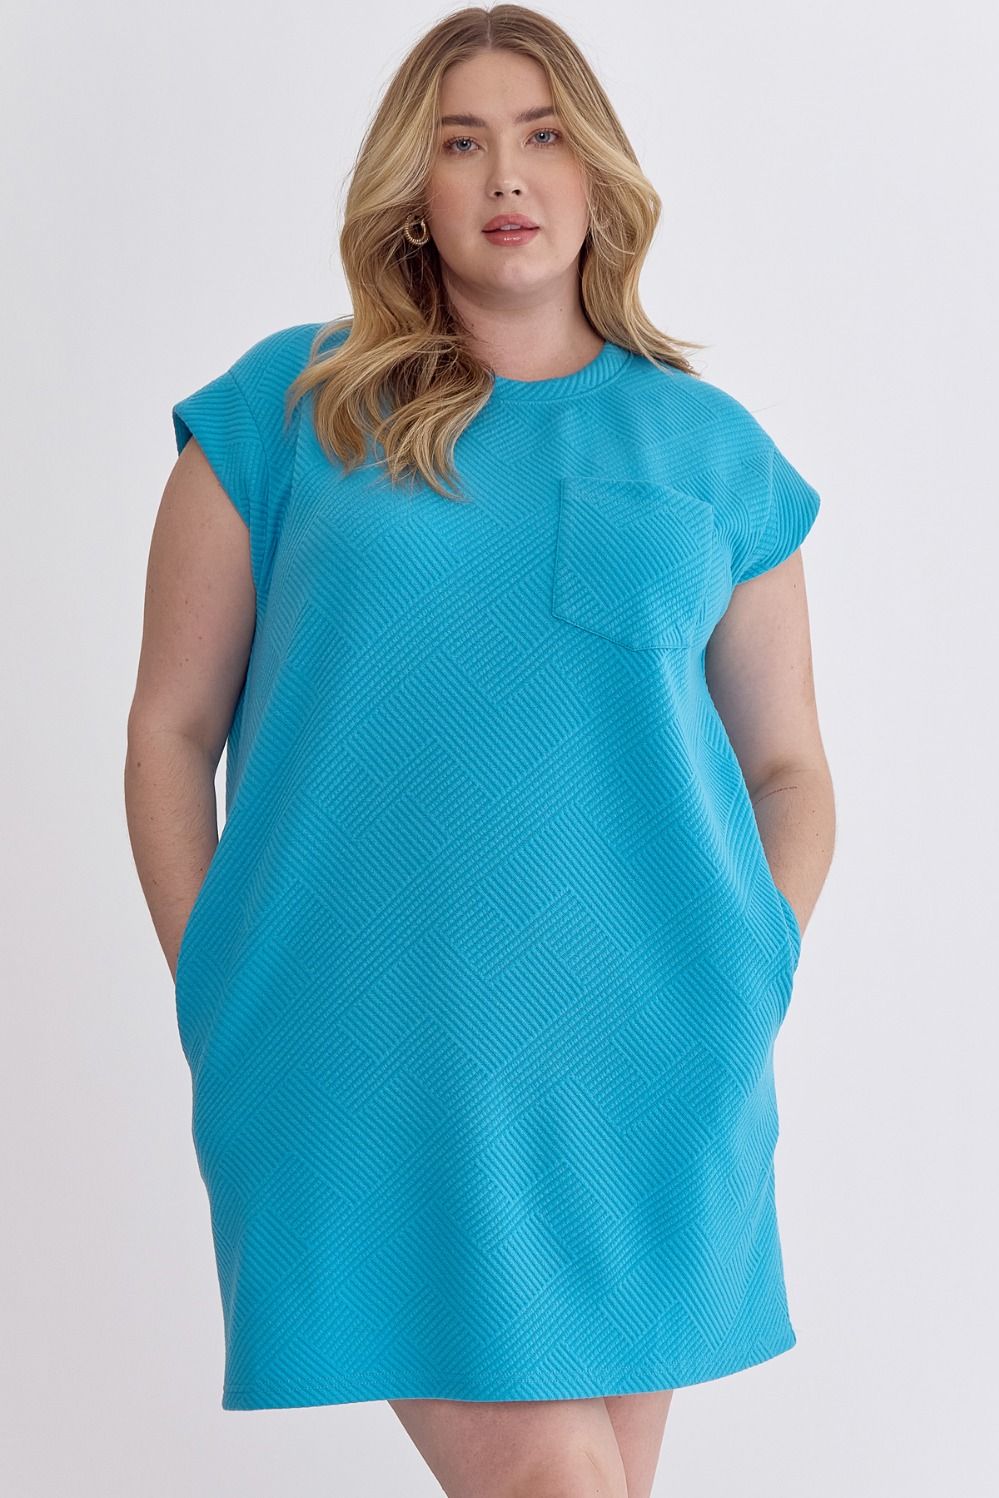 Noelle Textured Short Sleeve Dress in Aqua